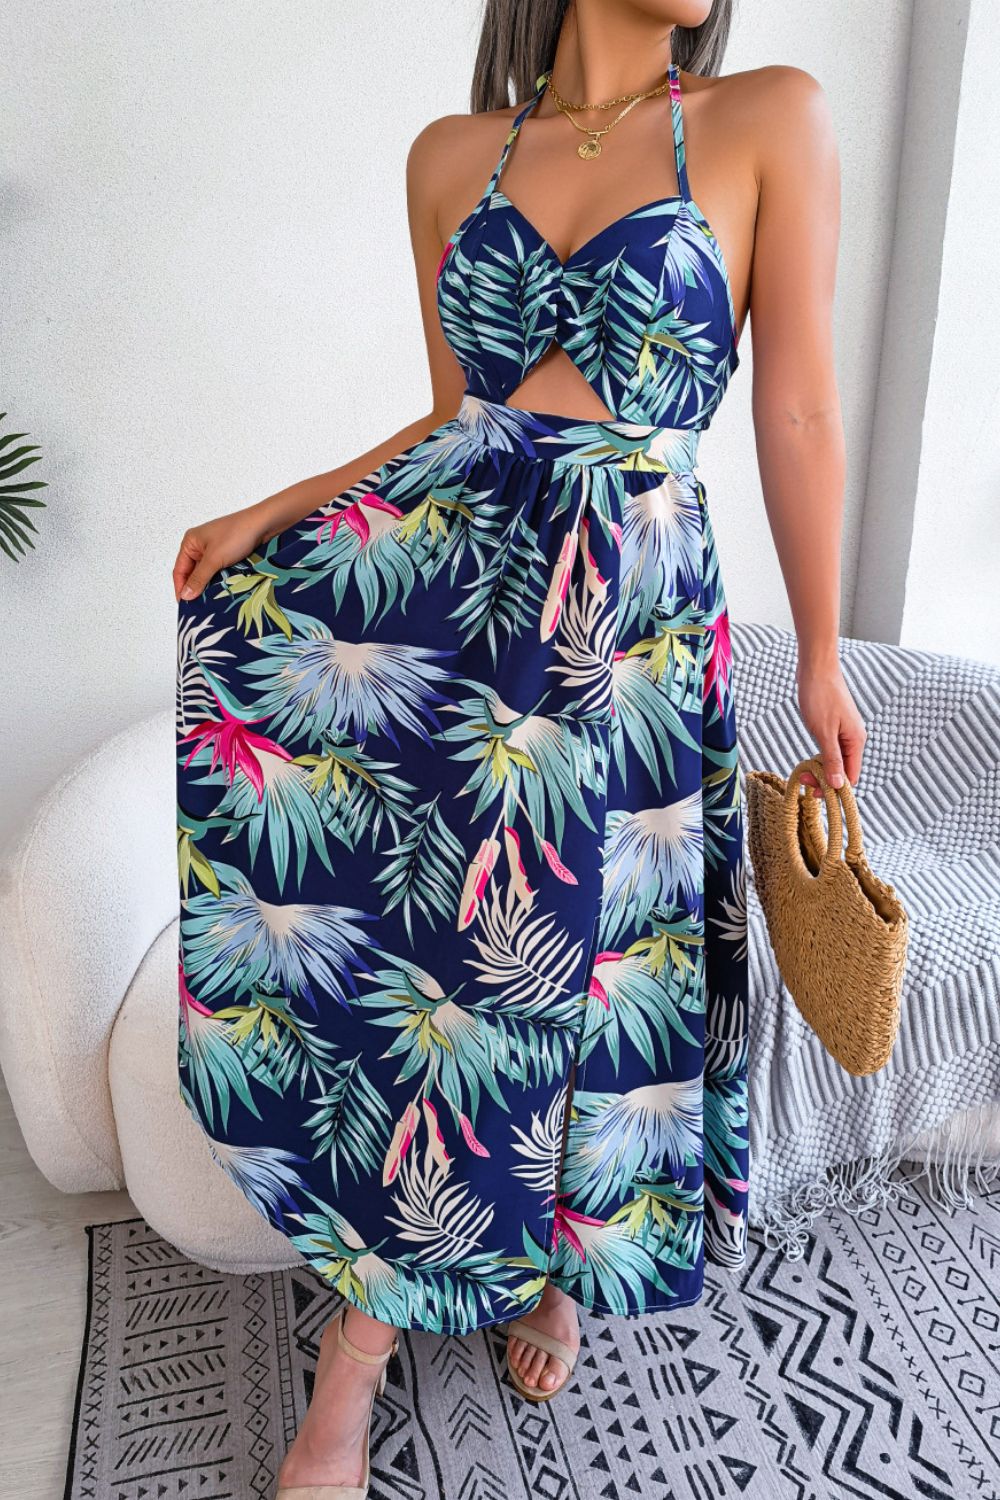 "Island Plants" Print Tied Backless Cutout Slit Dress